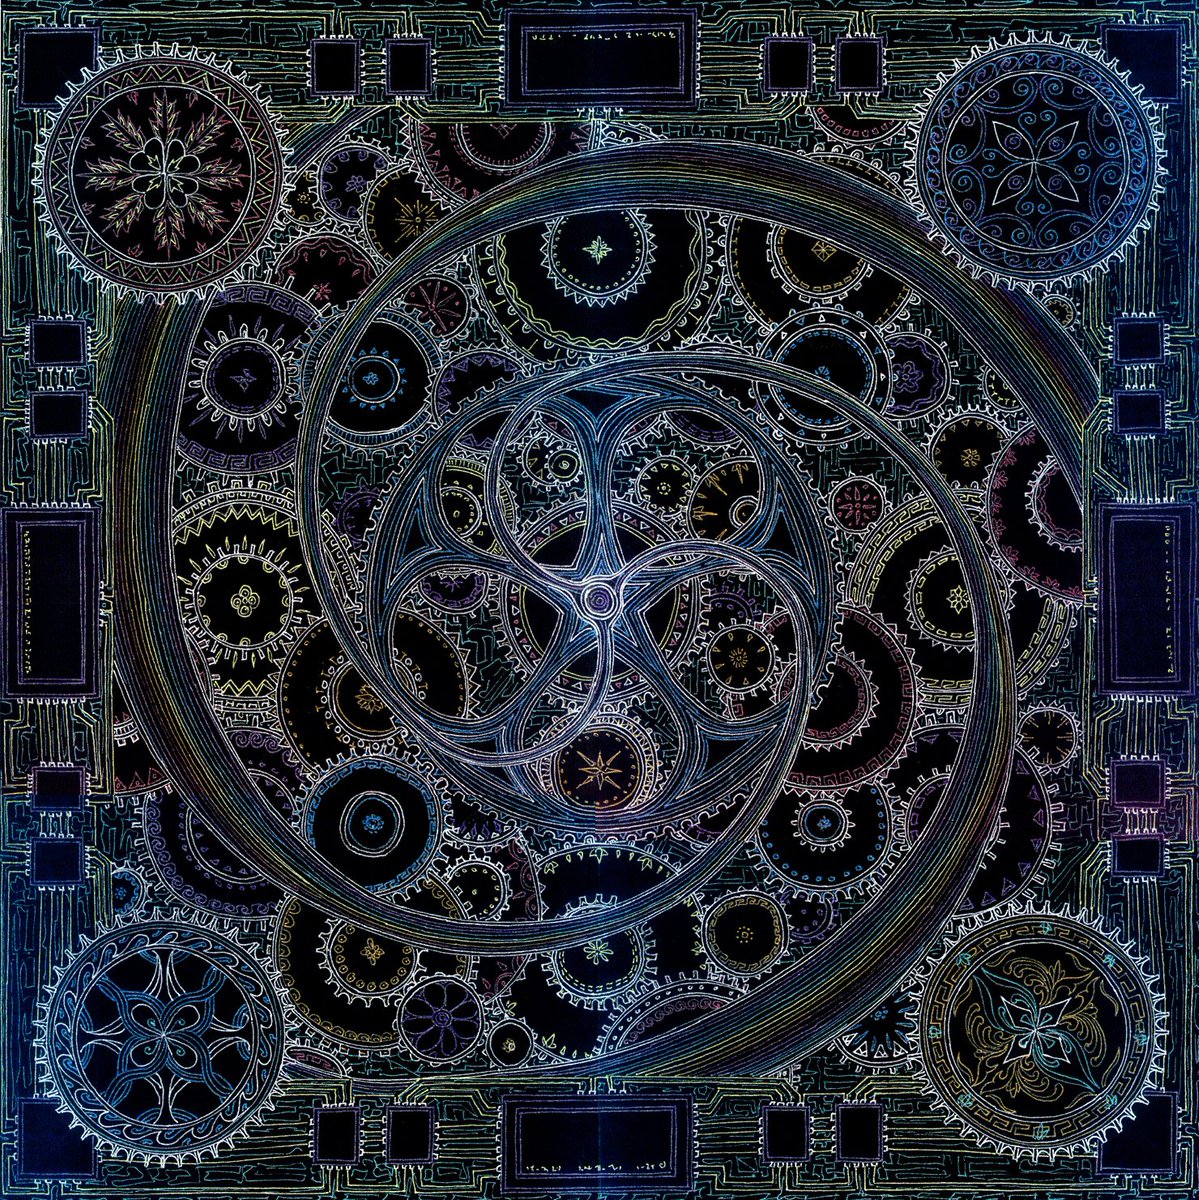 Mandala of the Chronos’ Dream Machine: Meditations on Regression

2012
Metallic Gel Pen on Illustration Board

#penandink #drawing #philippineart #sacredvision #sacredart #visionaryart #mandala #yantra #mandalaart